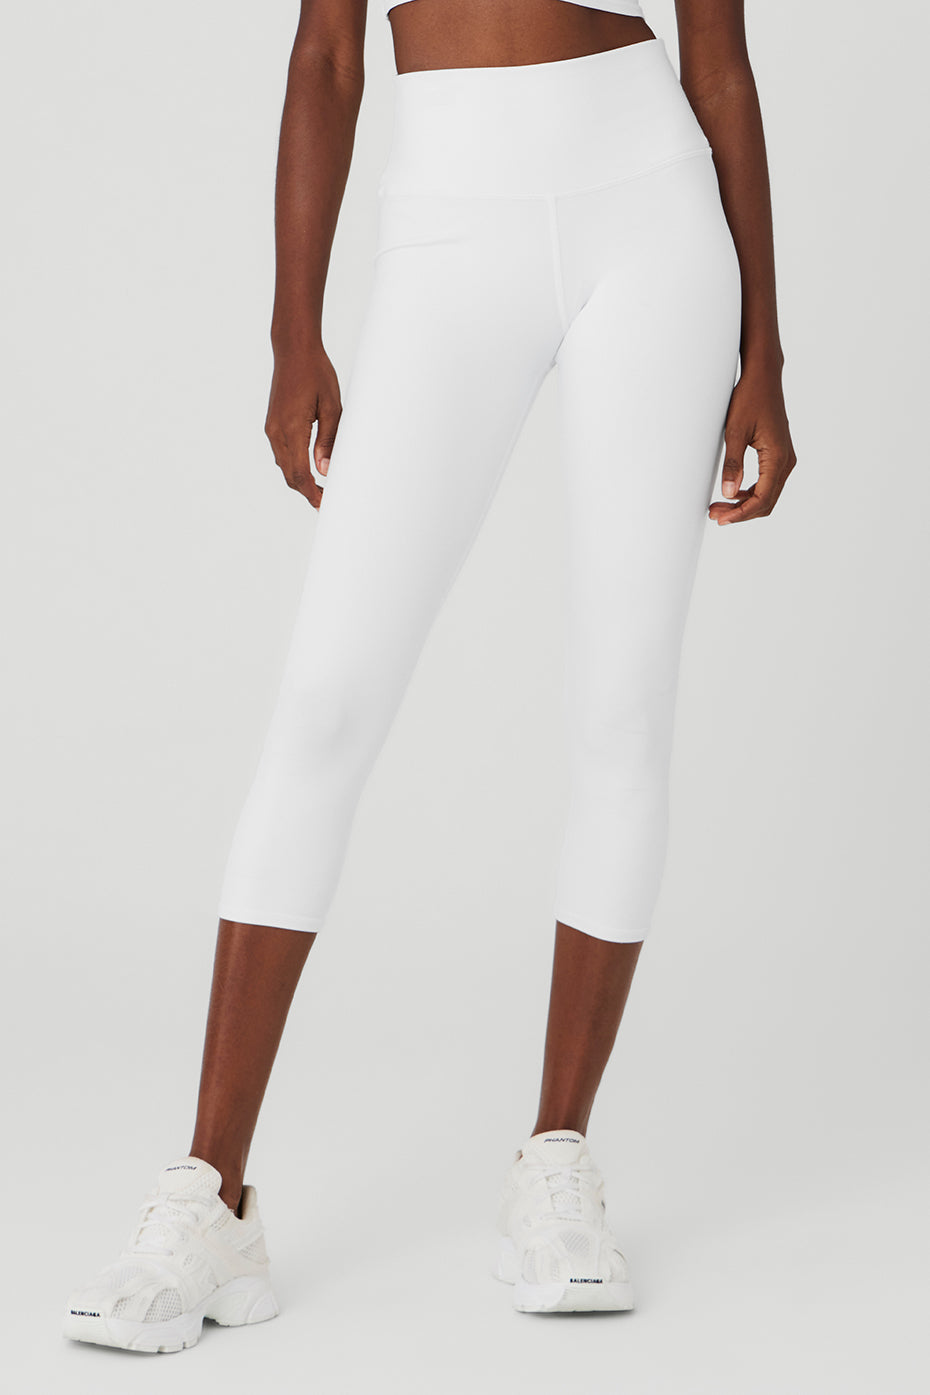 Airbrush High-Waist Heart Throb Legging - Black/White  White pants women,  Dress to impress, Black and white sneakers